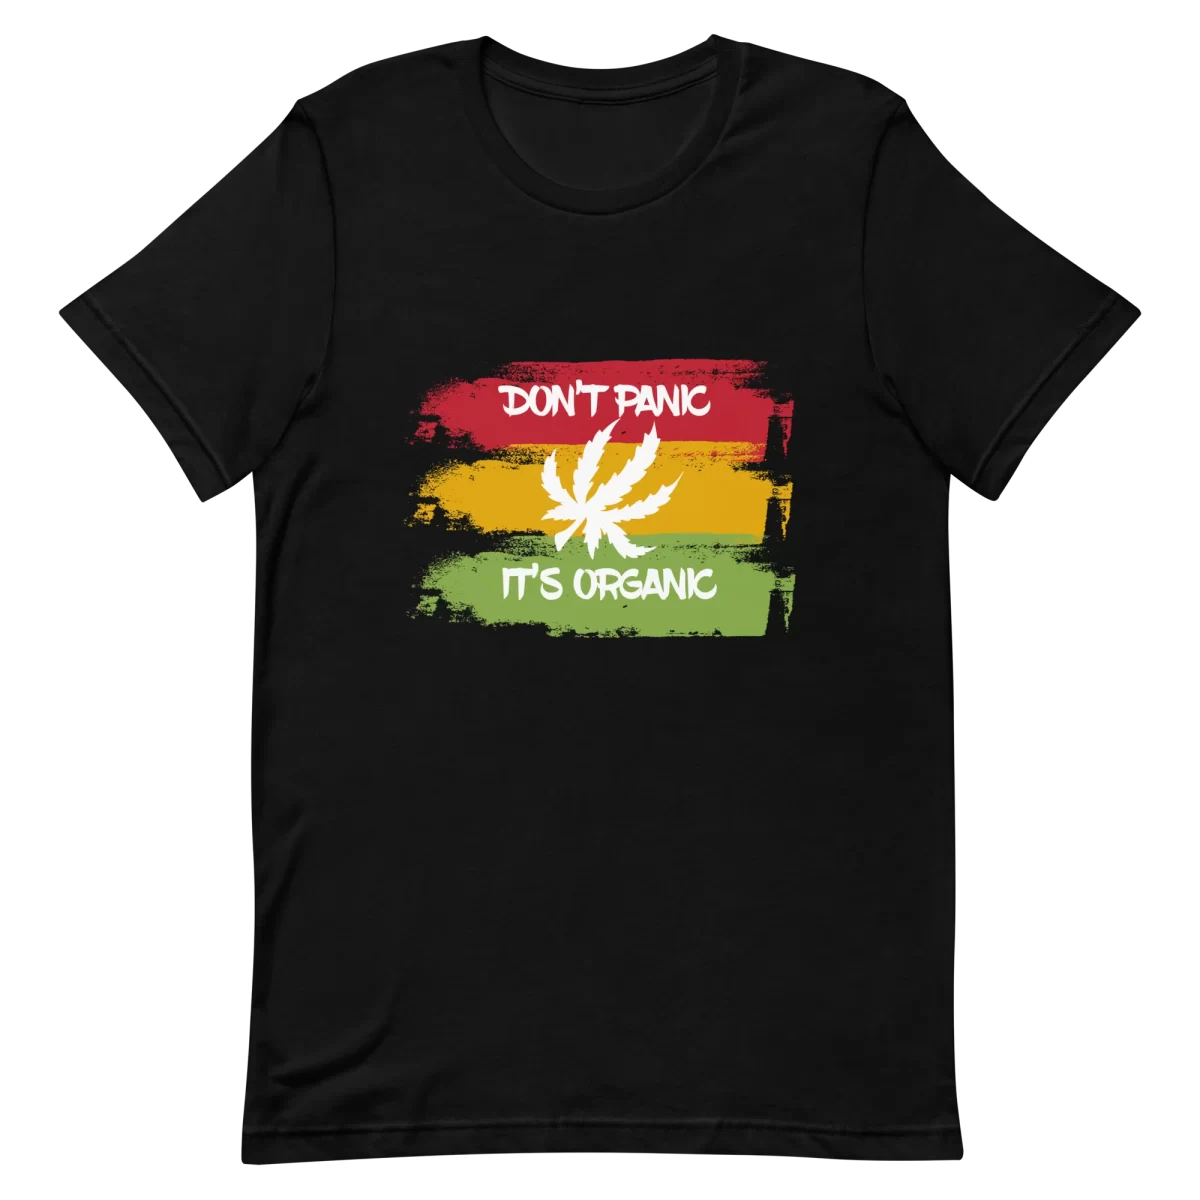 Unisex T-Shirt - Don't panic its organic - Black